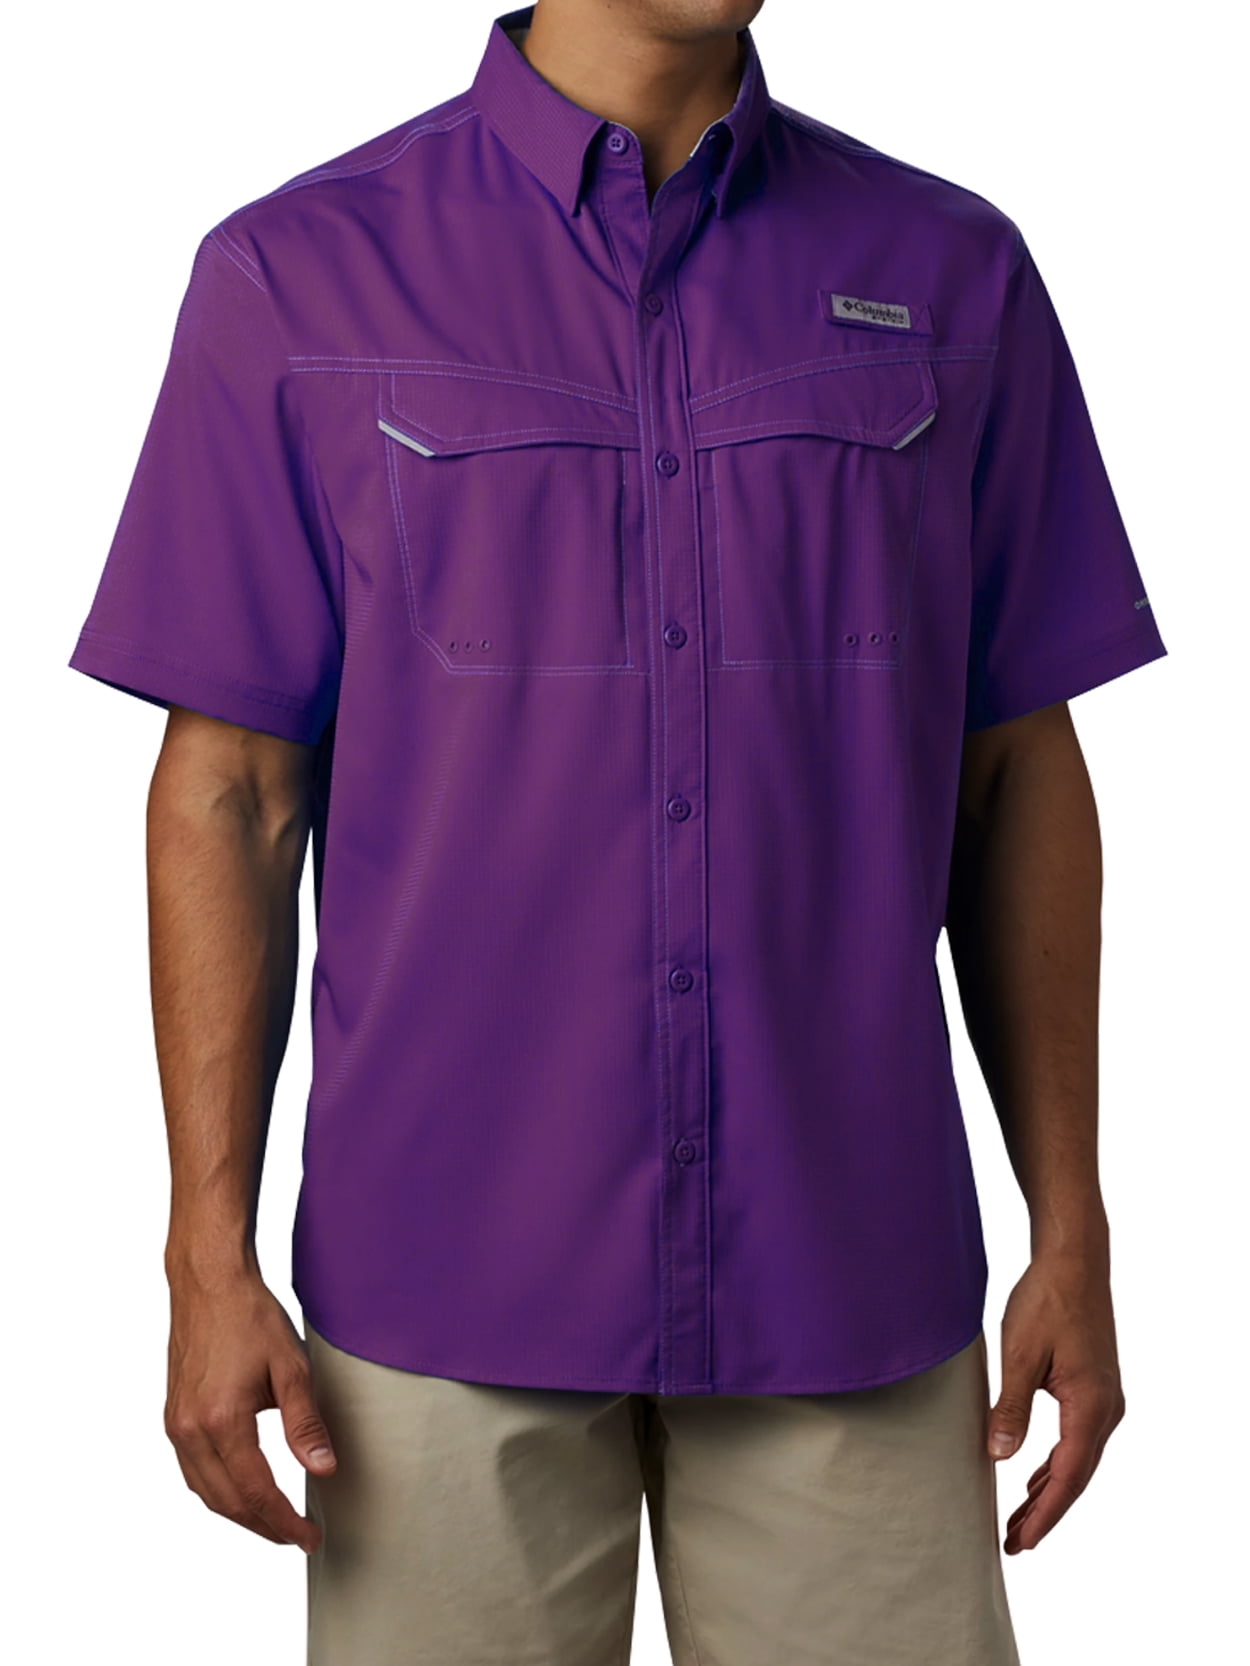 Columbia Sportswear Co. PFG Fishing gear Women's Bright Purple Button Size  M